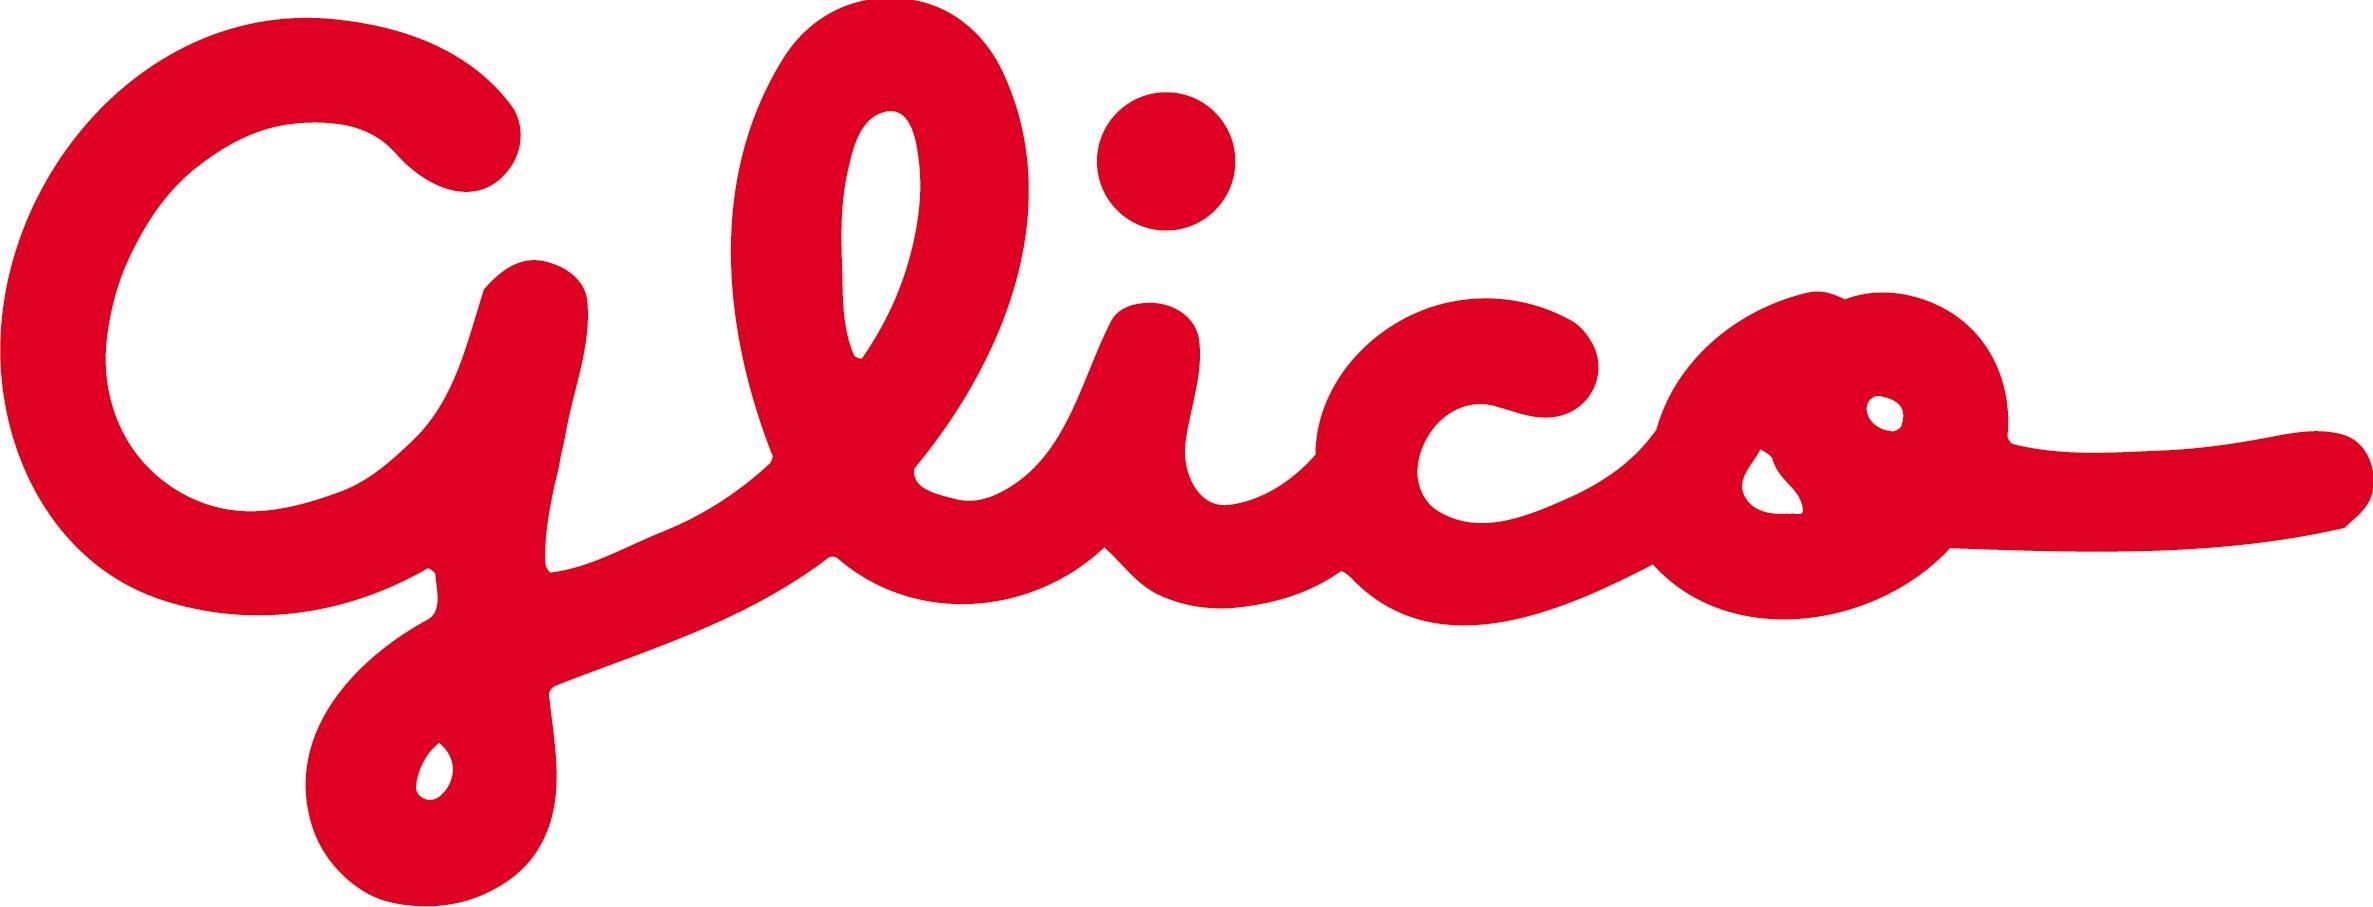 Japanese Company Logo - Japanese snack company Glico | logo ree searching | Pinterest ...